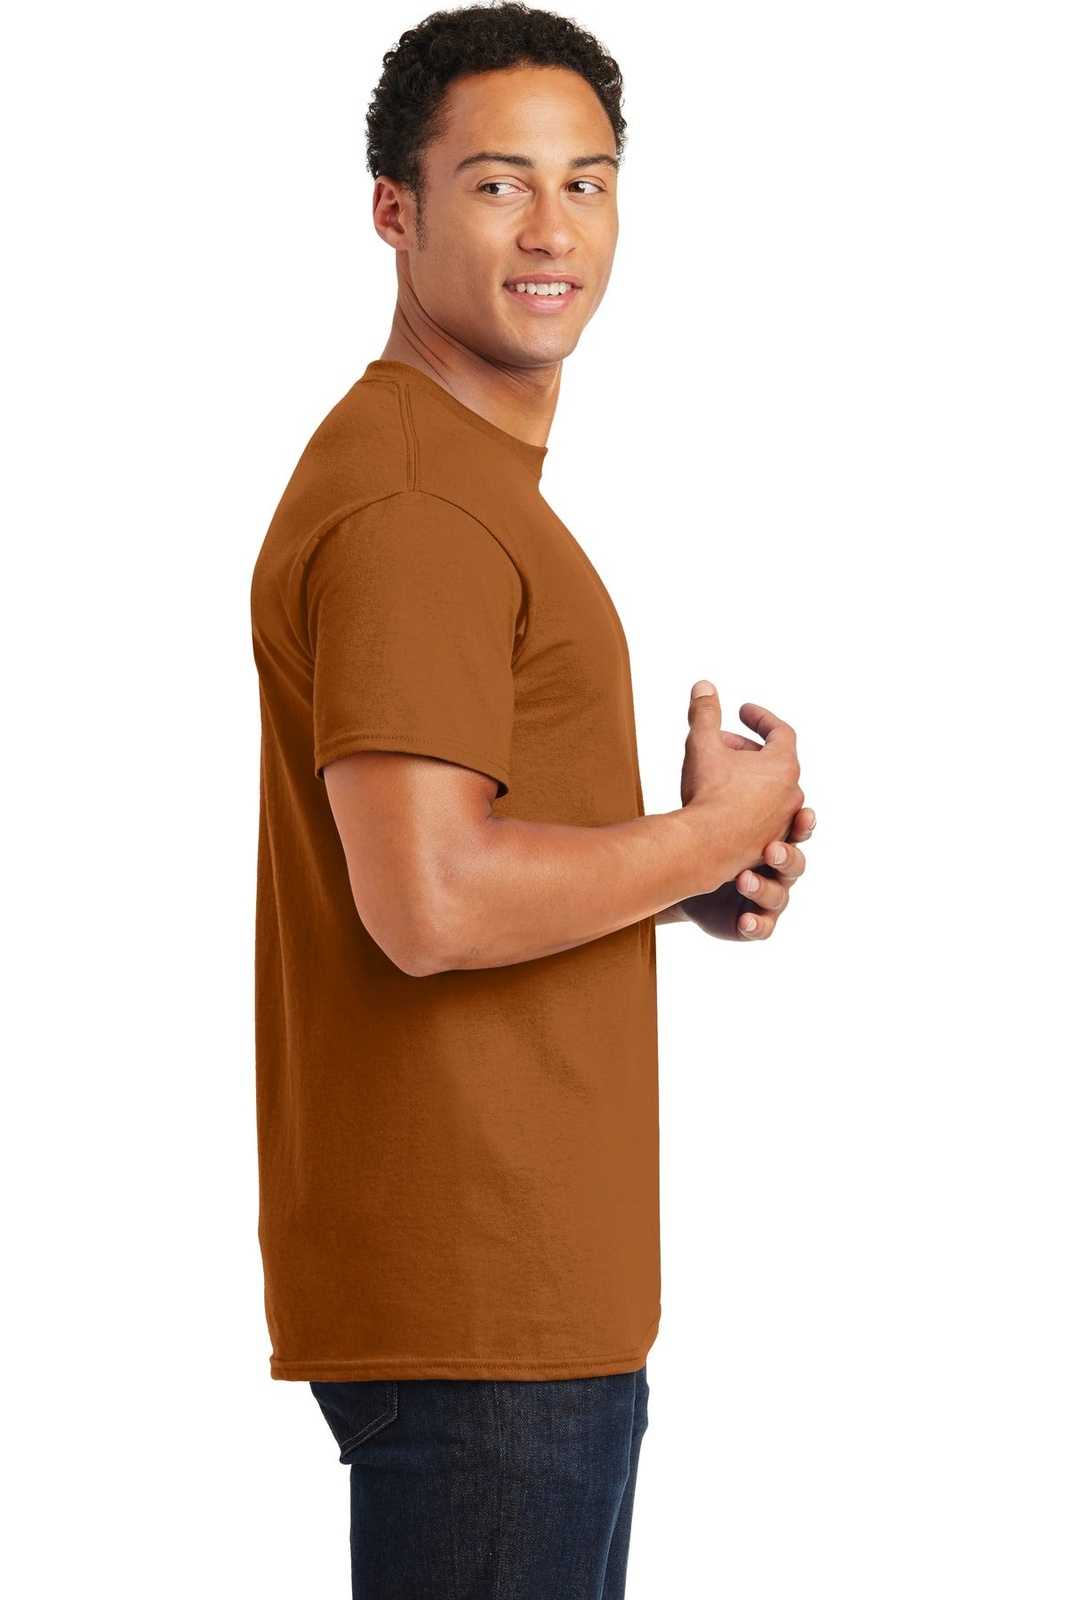 Gildan 2000 Ultra Cotton 100% Cotton T-Shirt - Texas Orange - HIT a Double